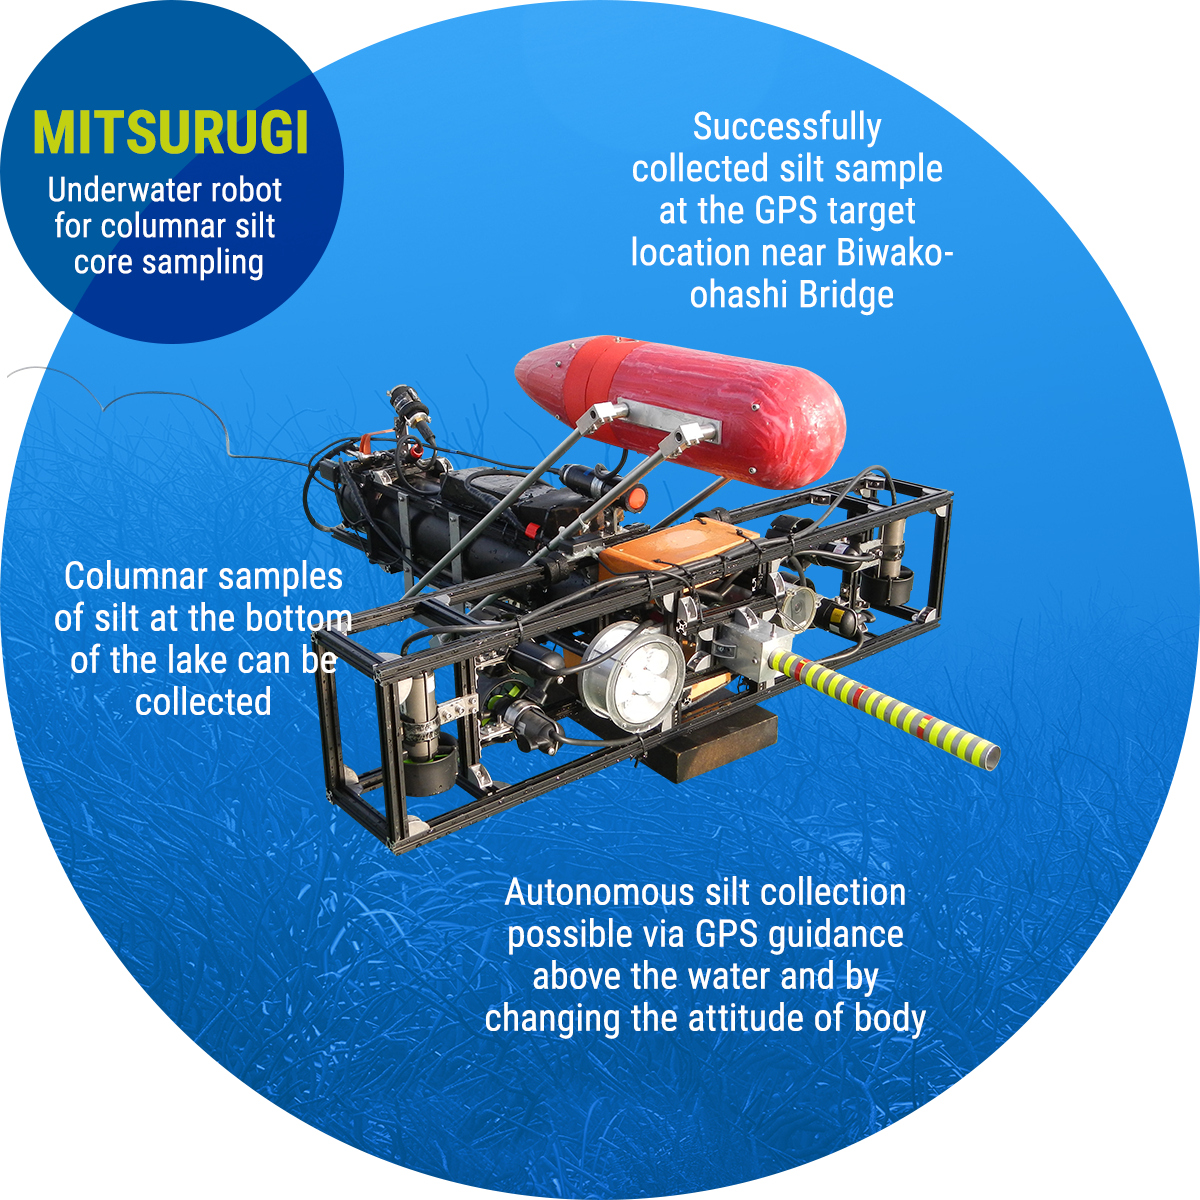 MITSURUGI: Underwater robot for columnar silt core sampling